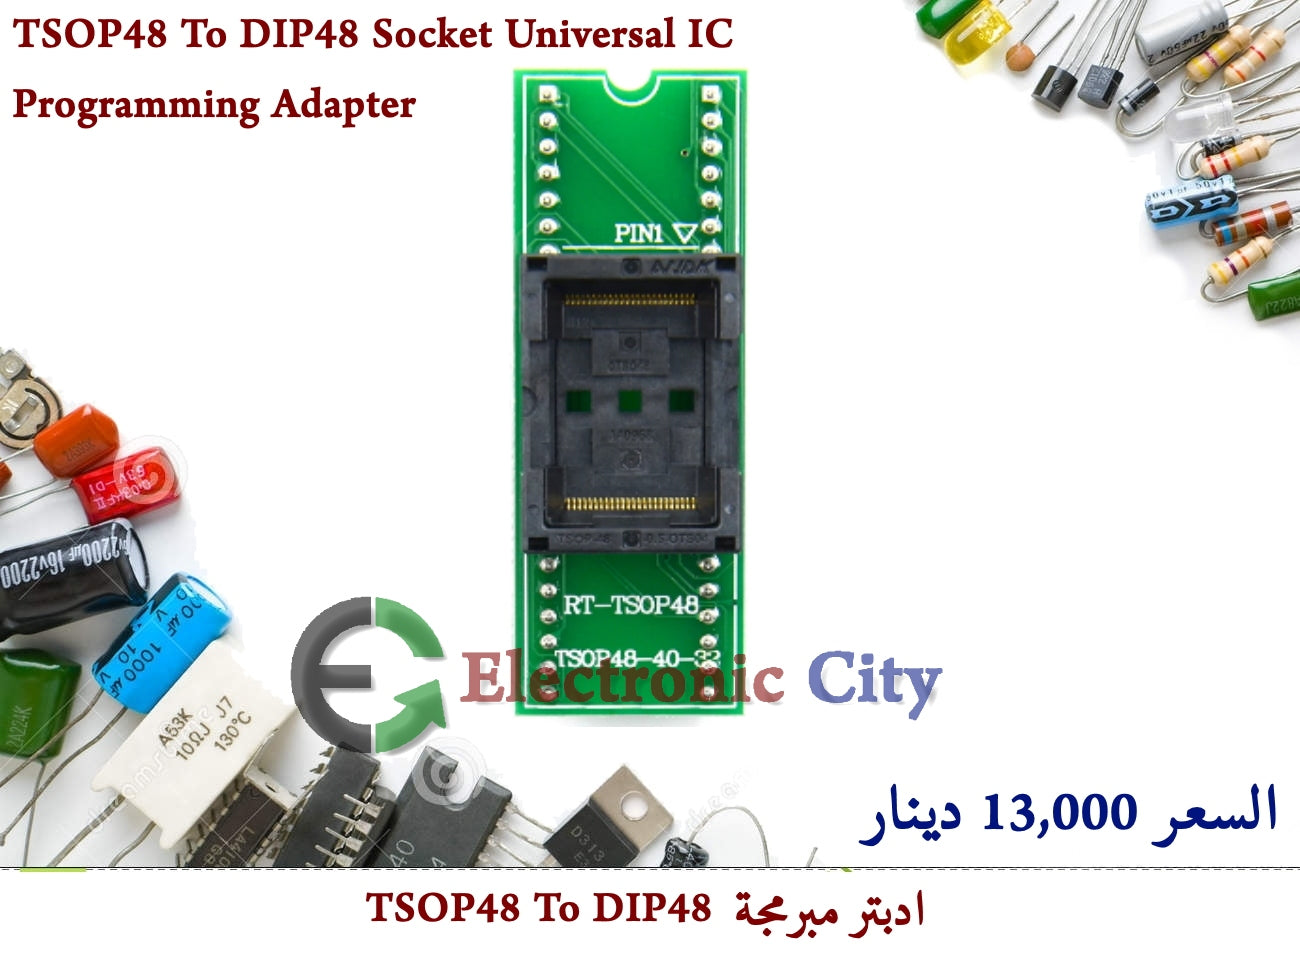 TSOP48 To DIP48 Socket Universal IC Programming Adapter